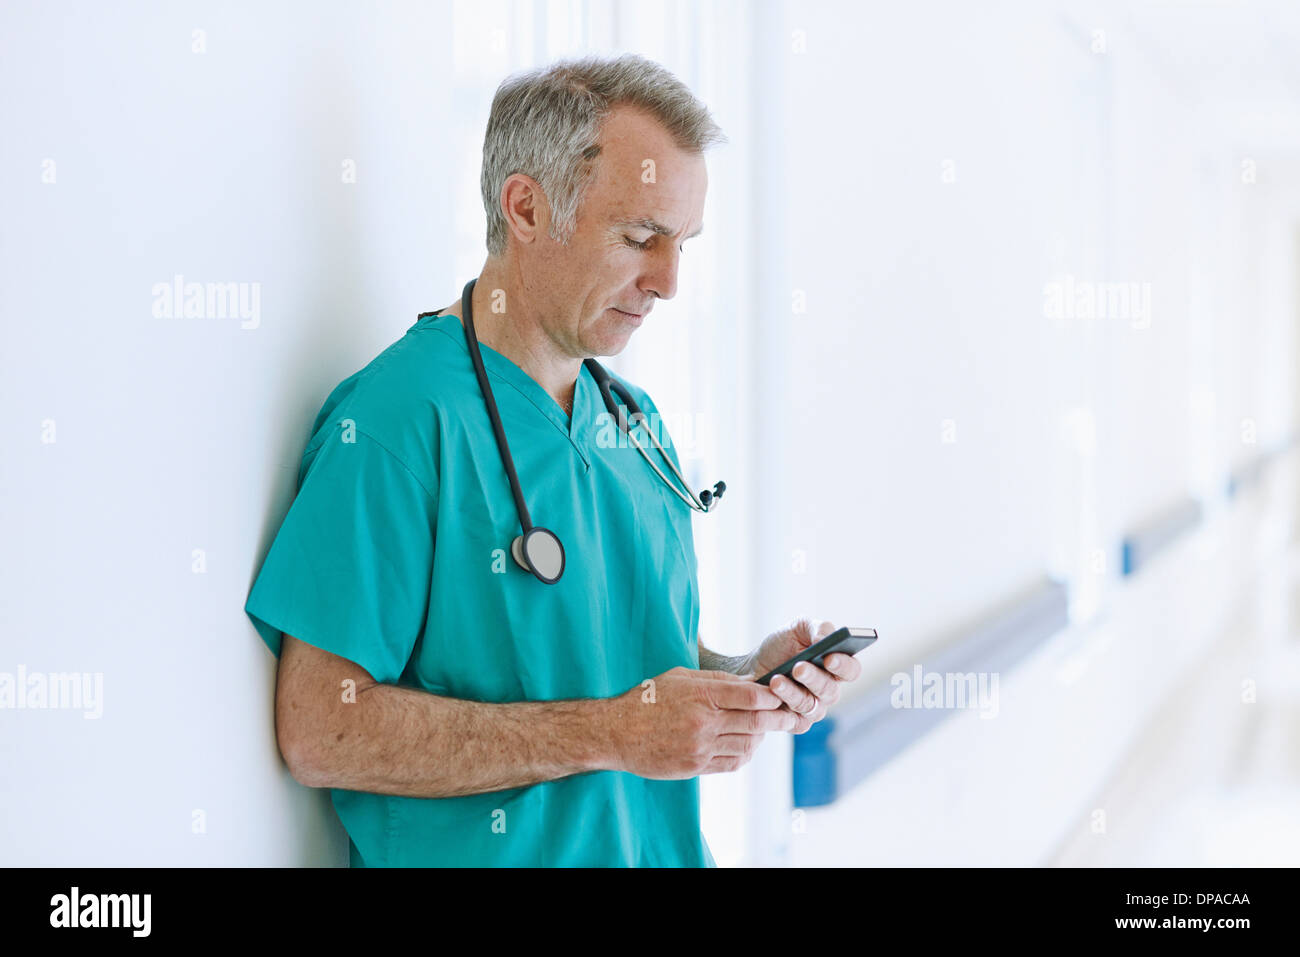 Surgeon standing in corridor looking at smartphone Banque D'Images